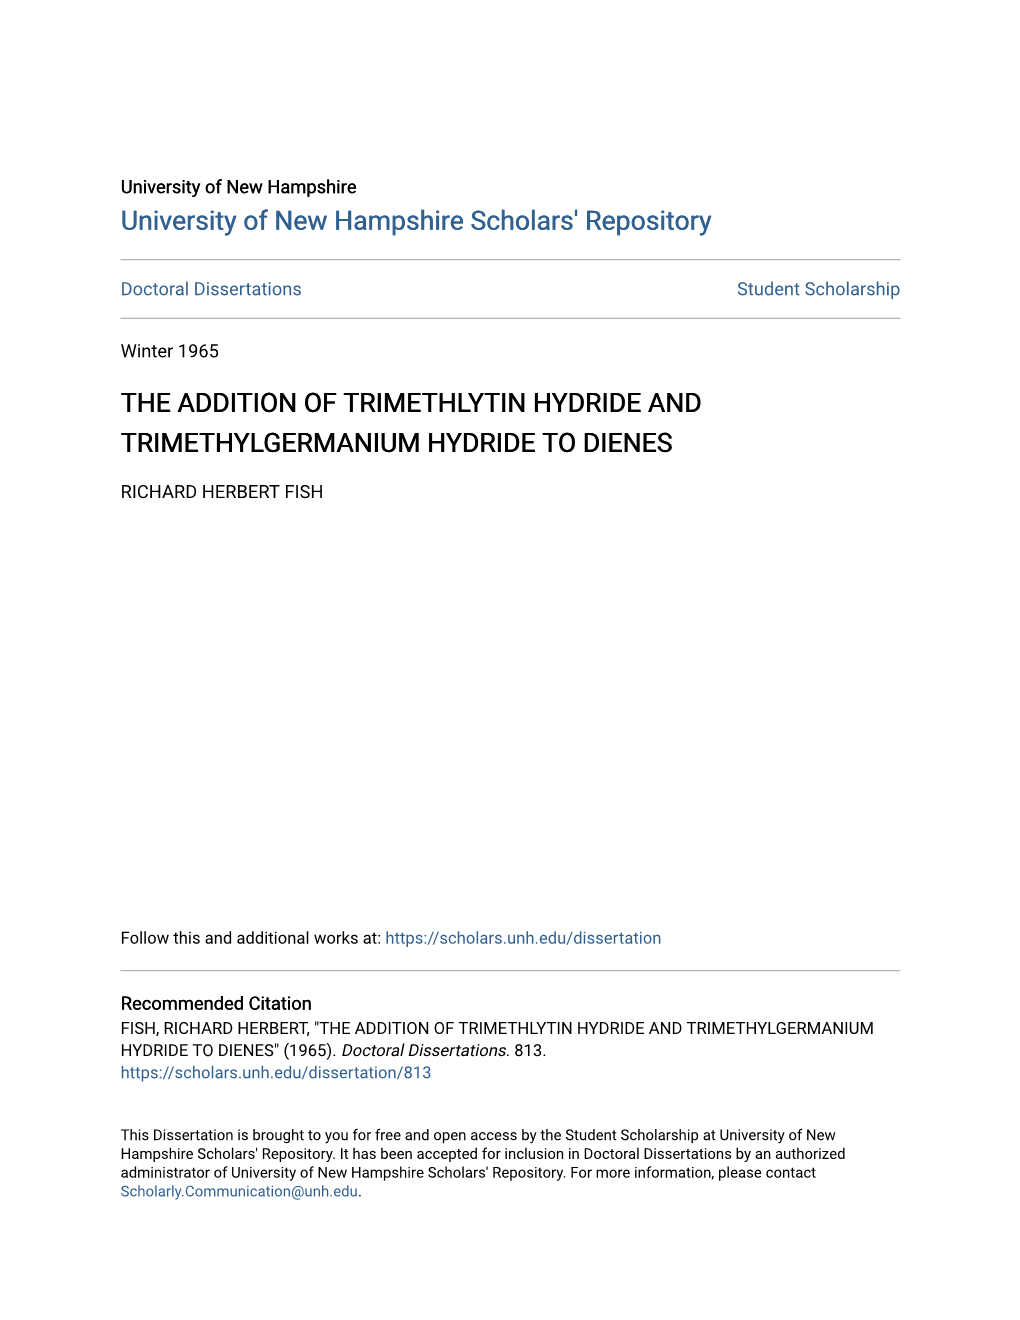 The Addition of Trimethlytin Hydride and Trimethylgermanium Hydride to Dienes